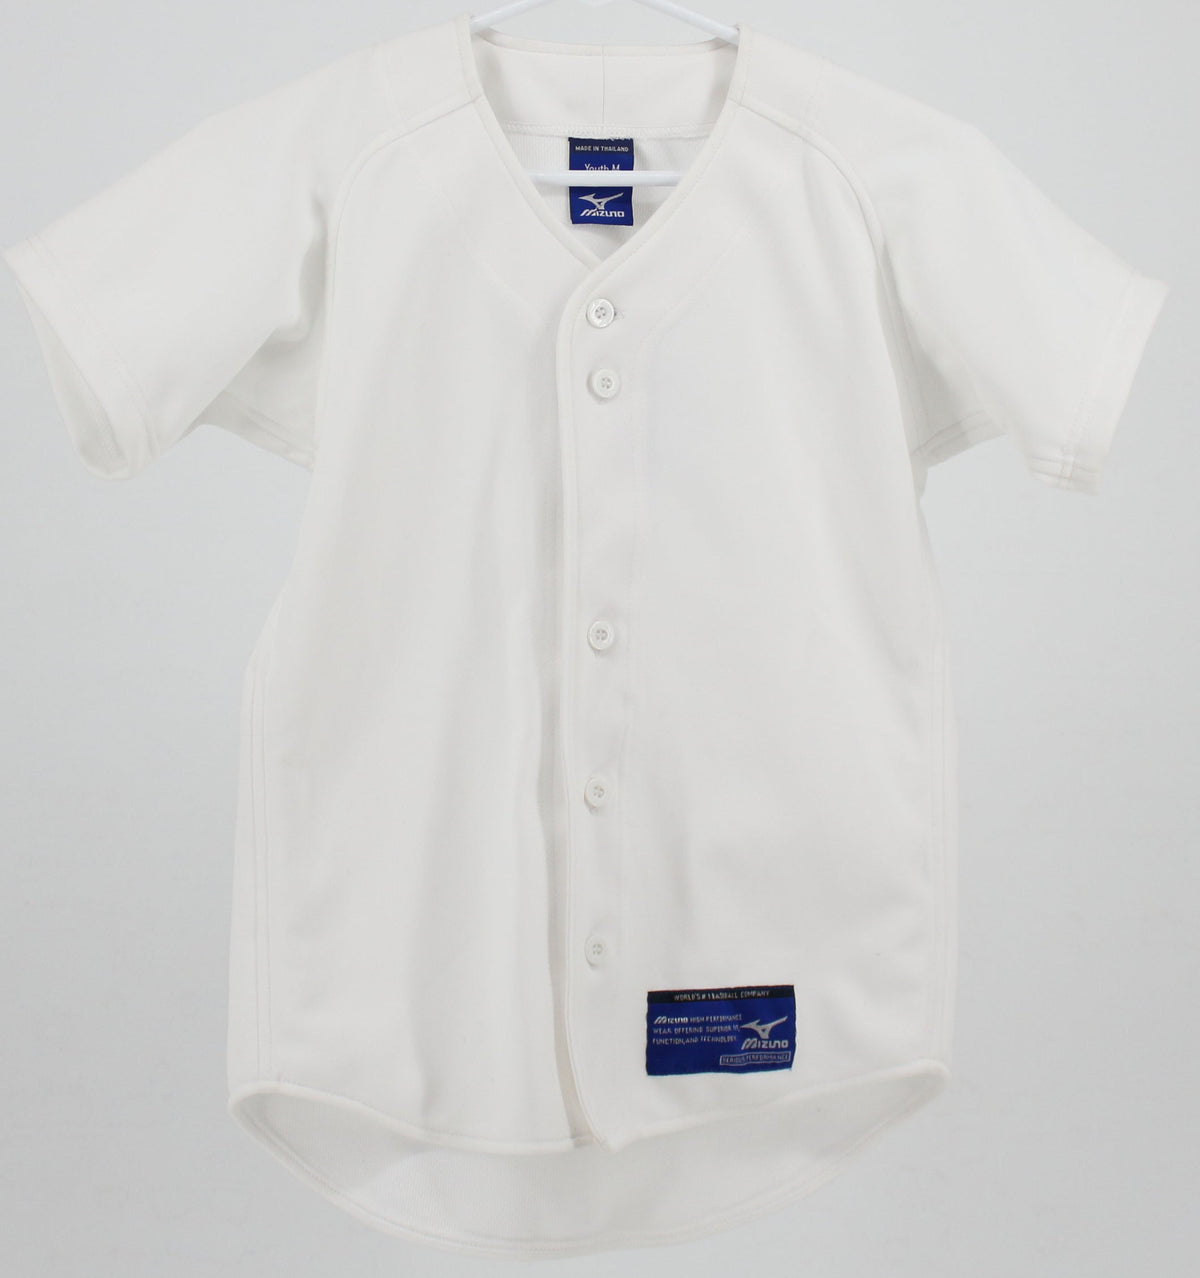 Mizuno World's #1 Baseball Company Short Sleeve White Shirt